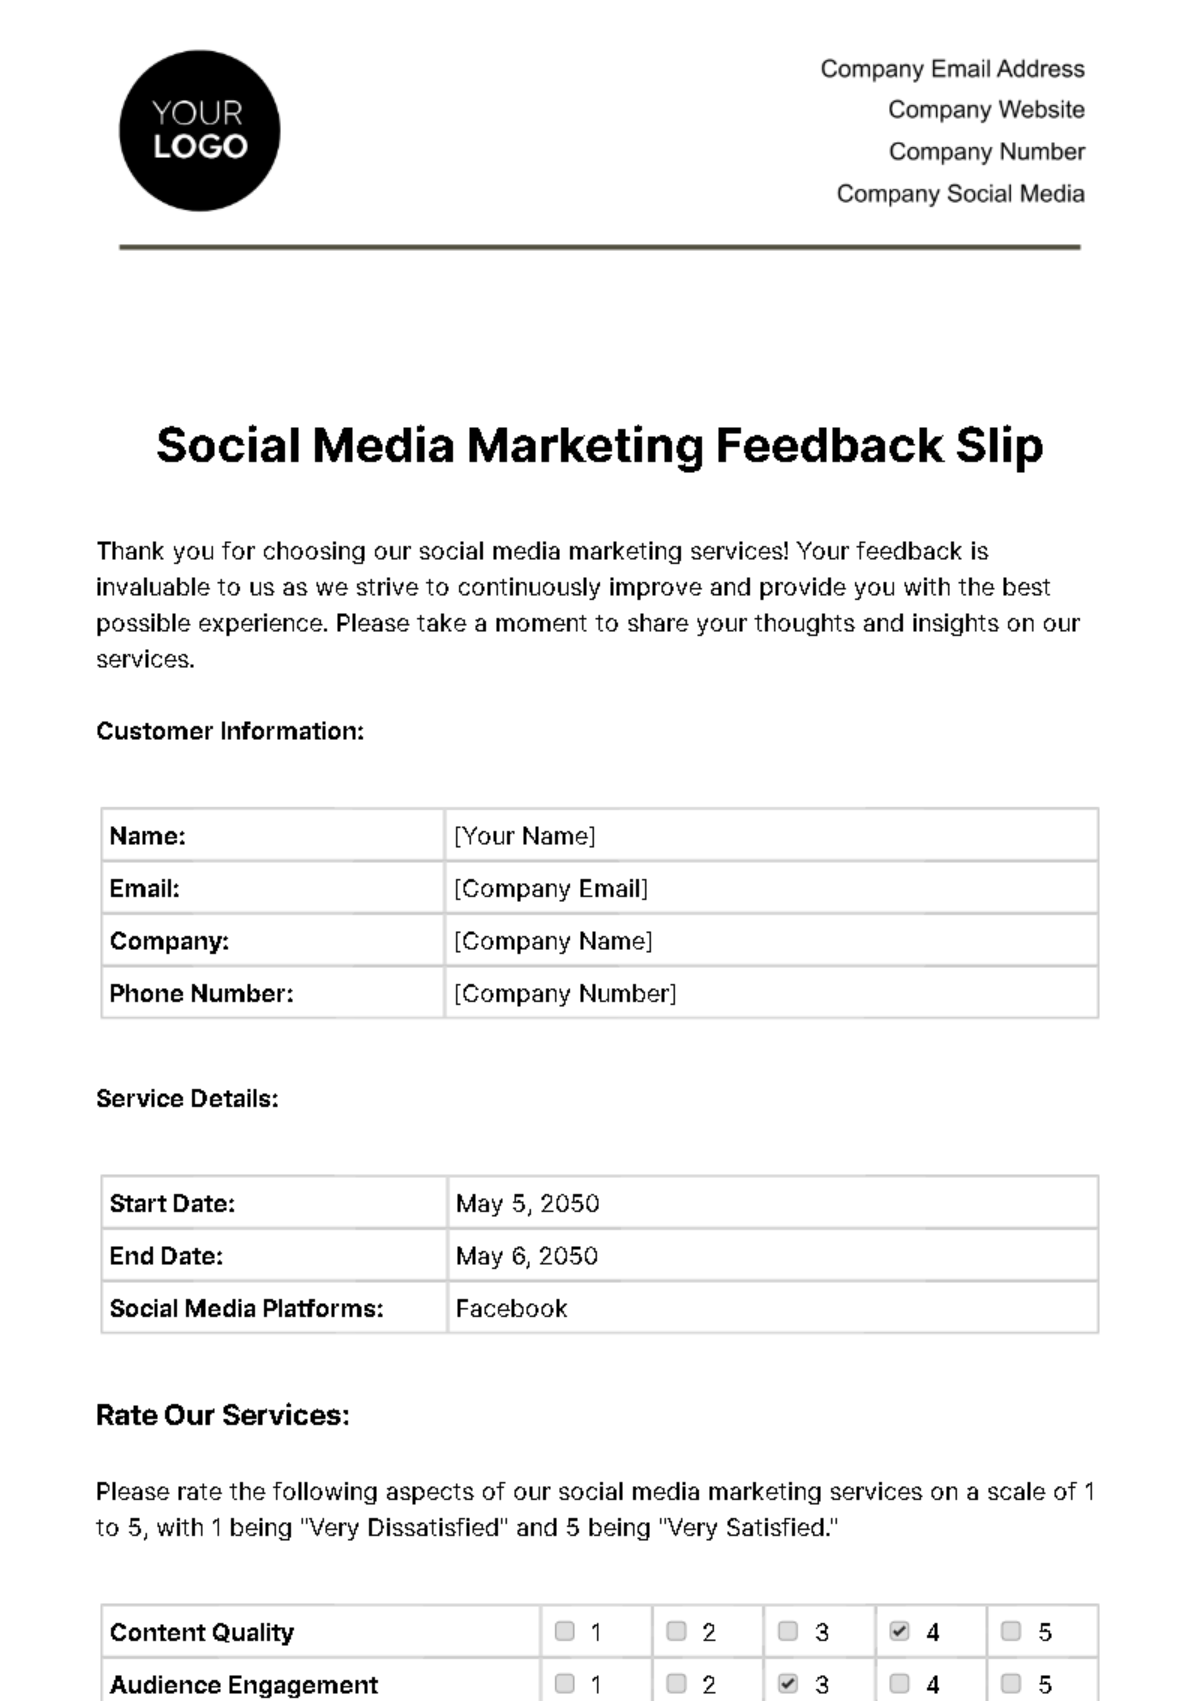 Social Media Marketing Feedback Slip Template